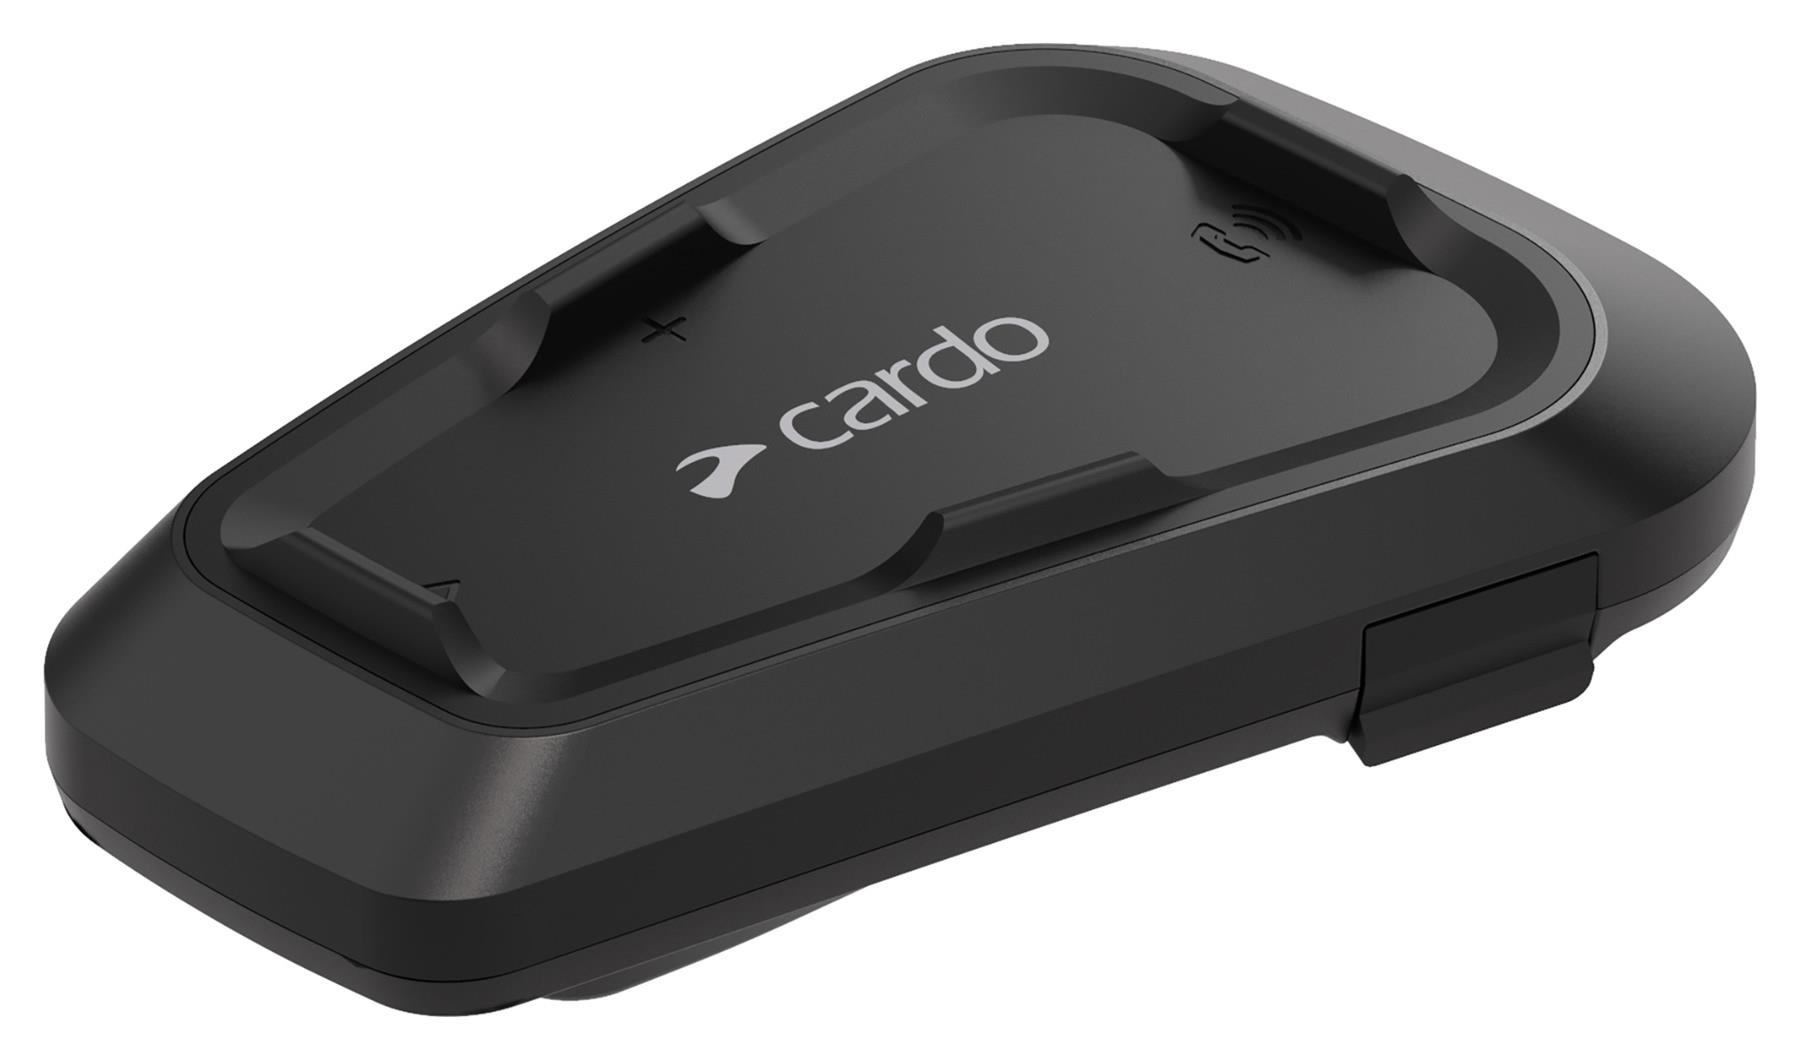 Cardo Spirit HD Moto handsfree süsteem